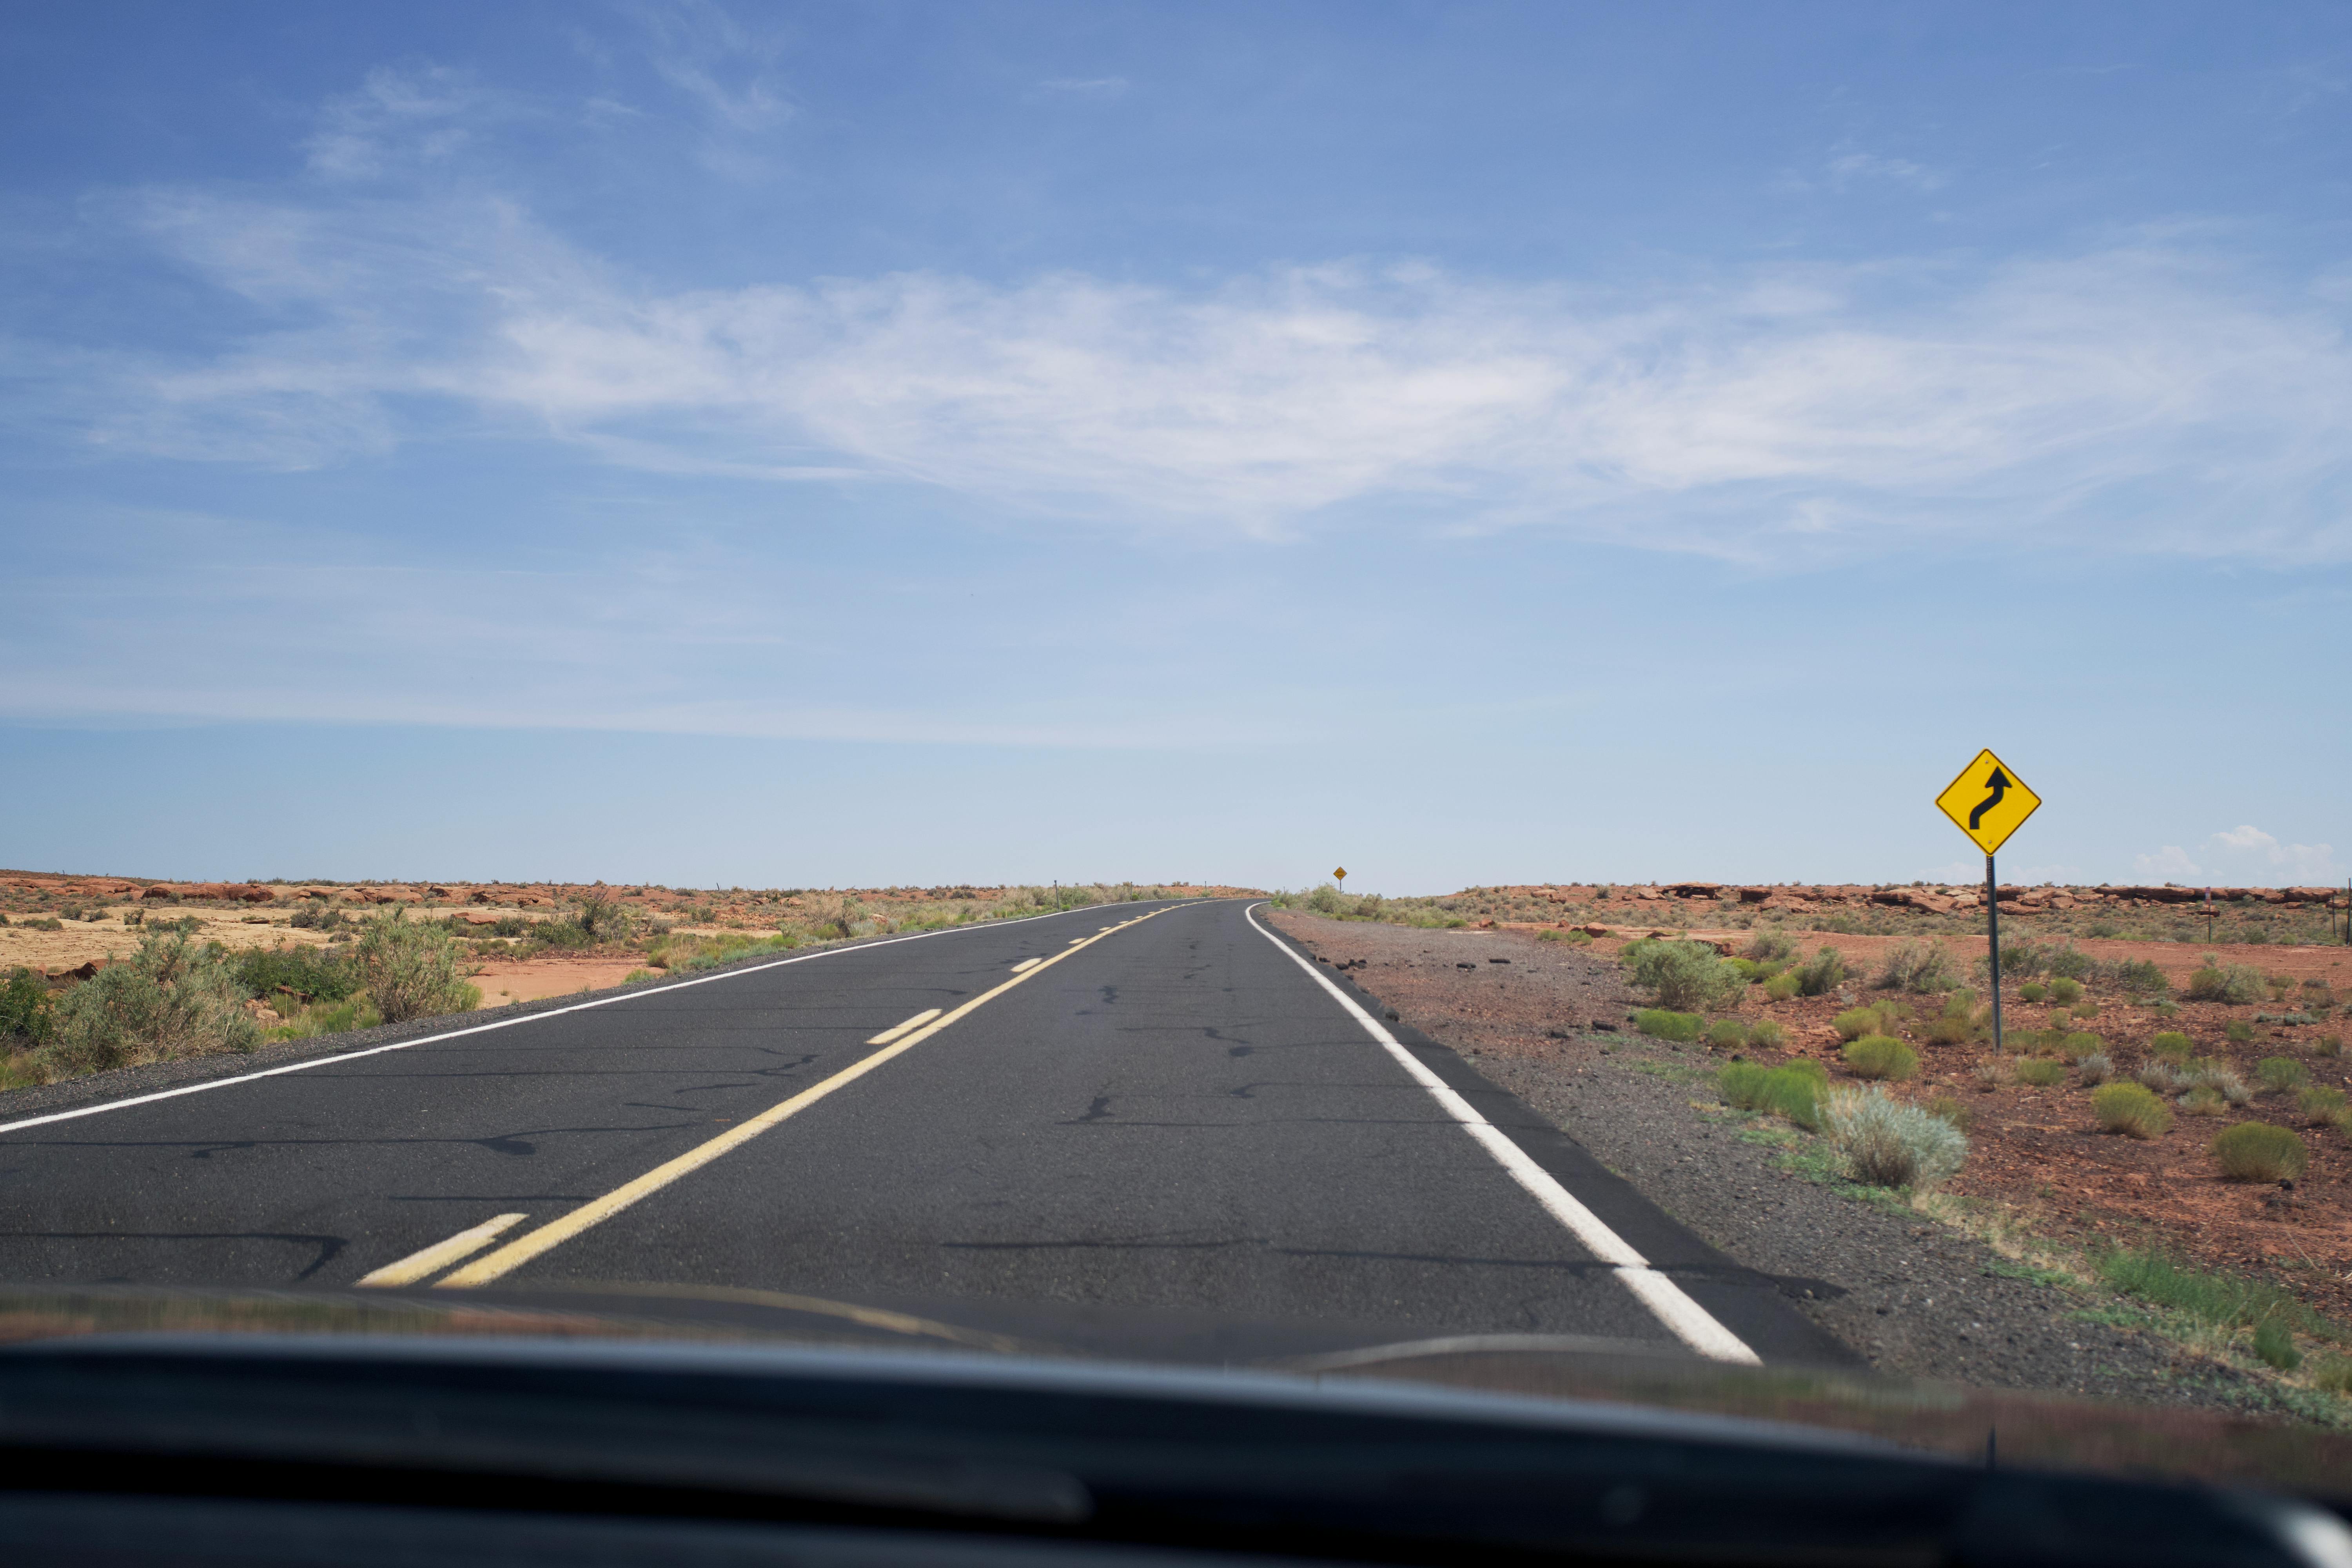 driving on an empty asphalt road through the desert